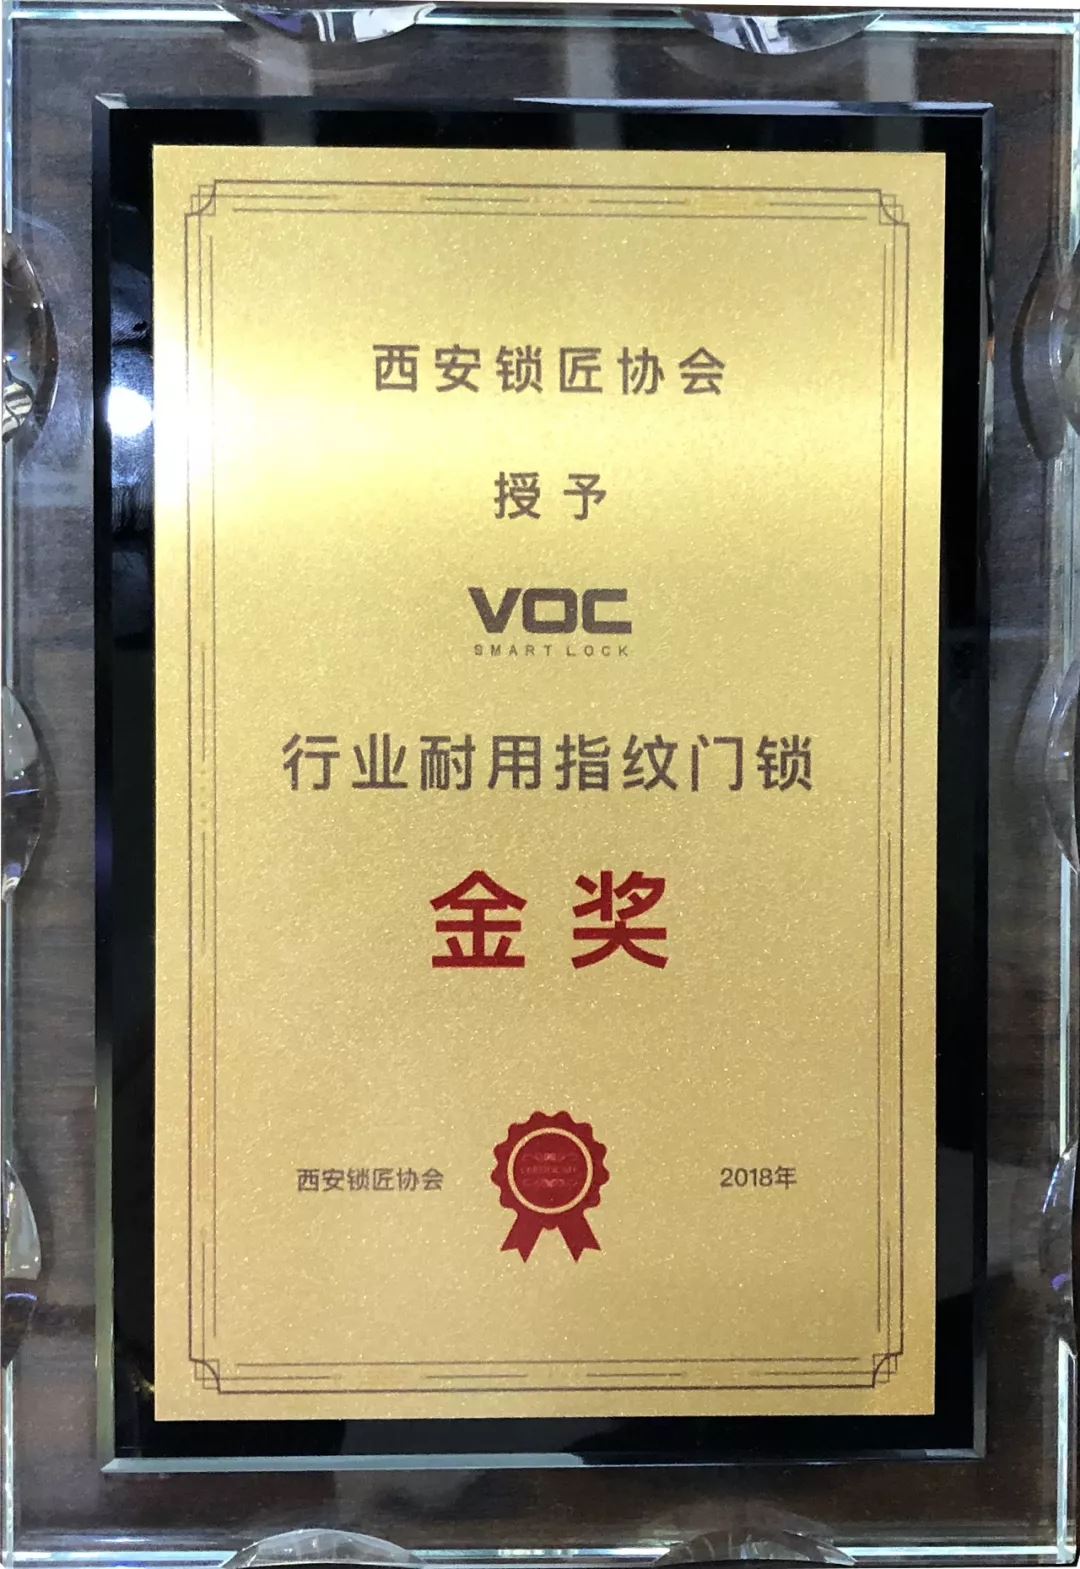 VOC品质卓越，西安市锁匠协会授予行业指纹门锁耐用金奖